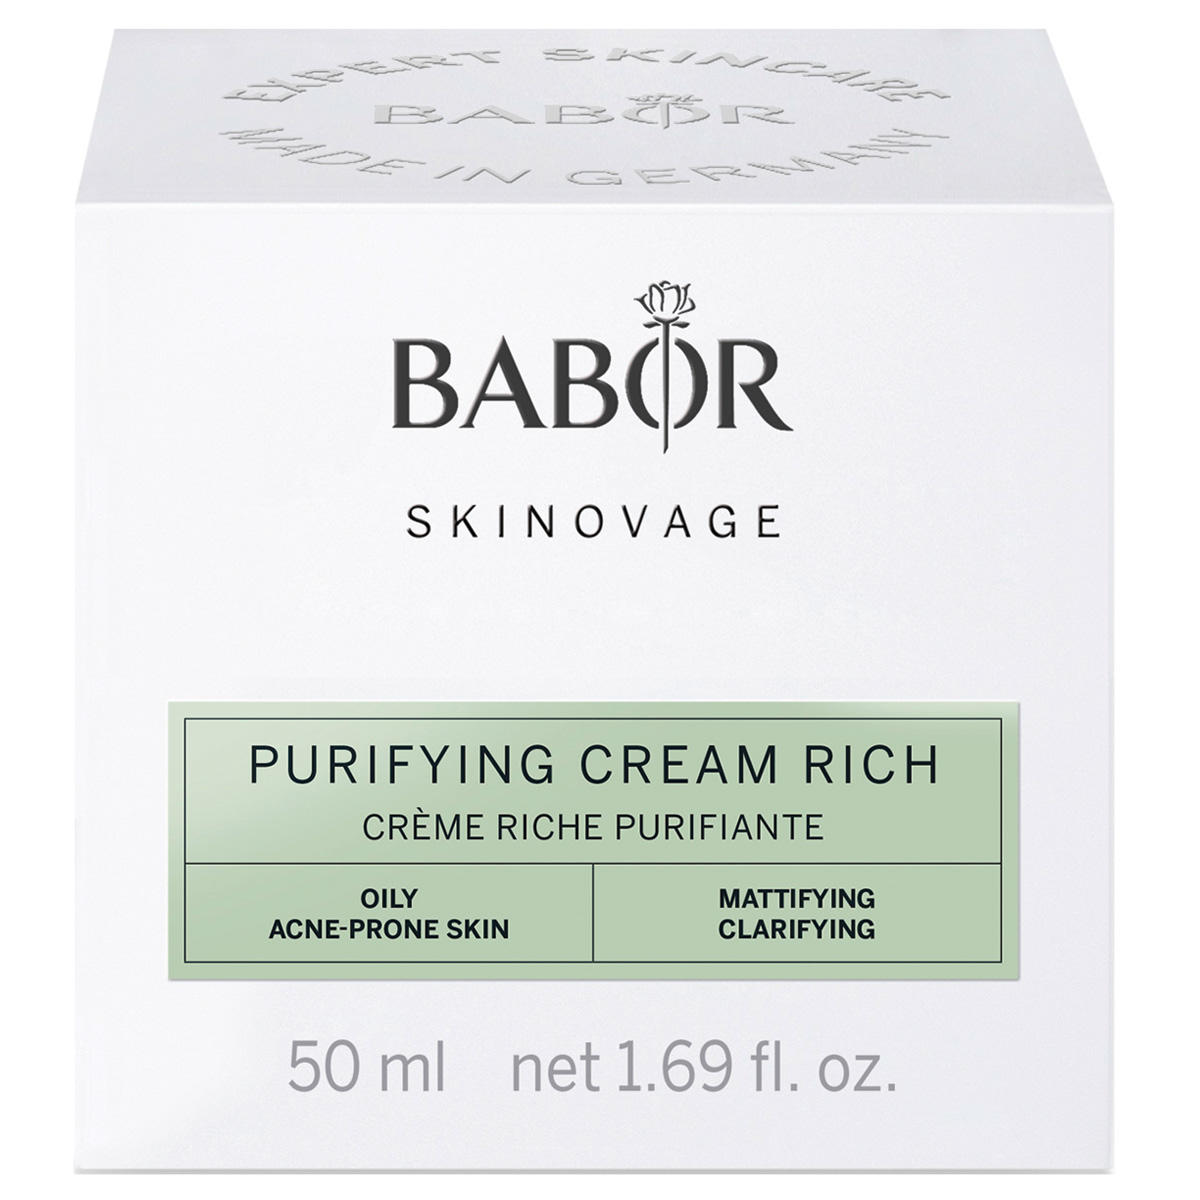 BABOR SKINOVAGE Purifying Cream rich 50 ml - 2